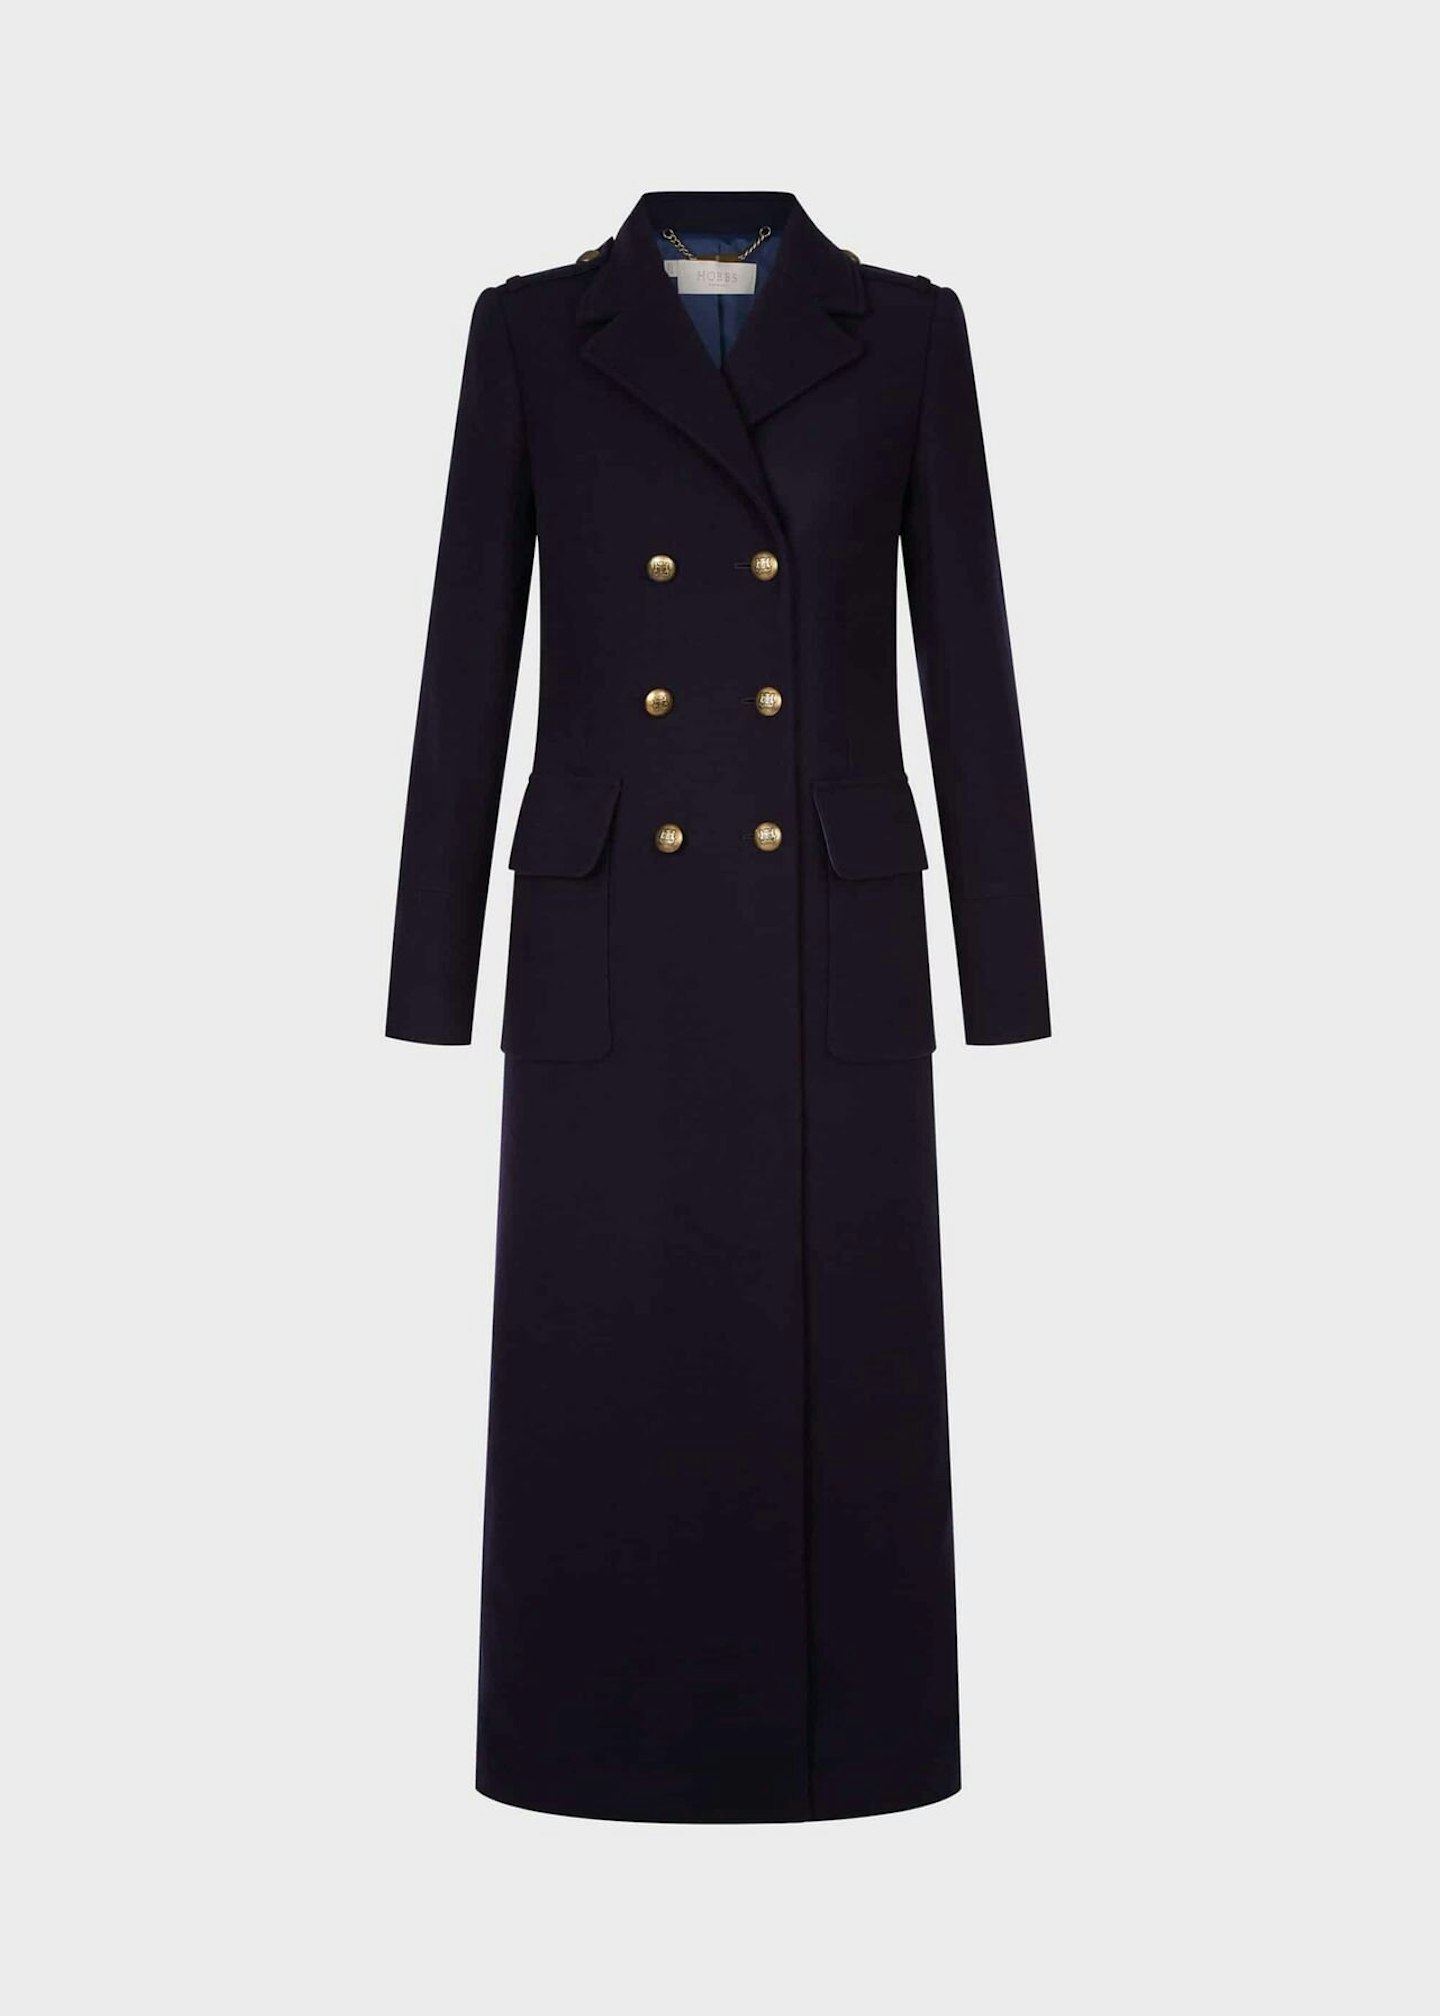 Hobbs, Maxi Coat, £259